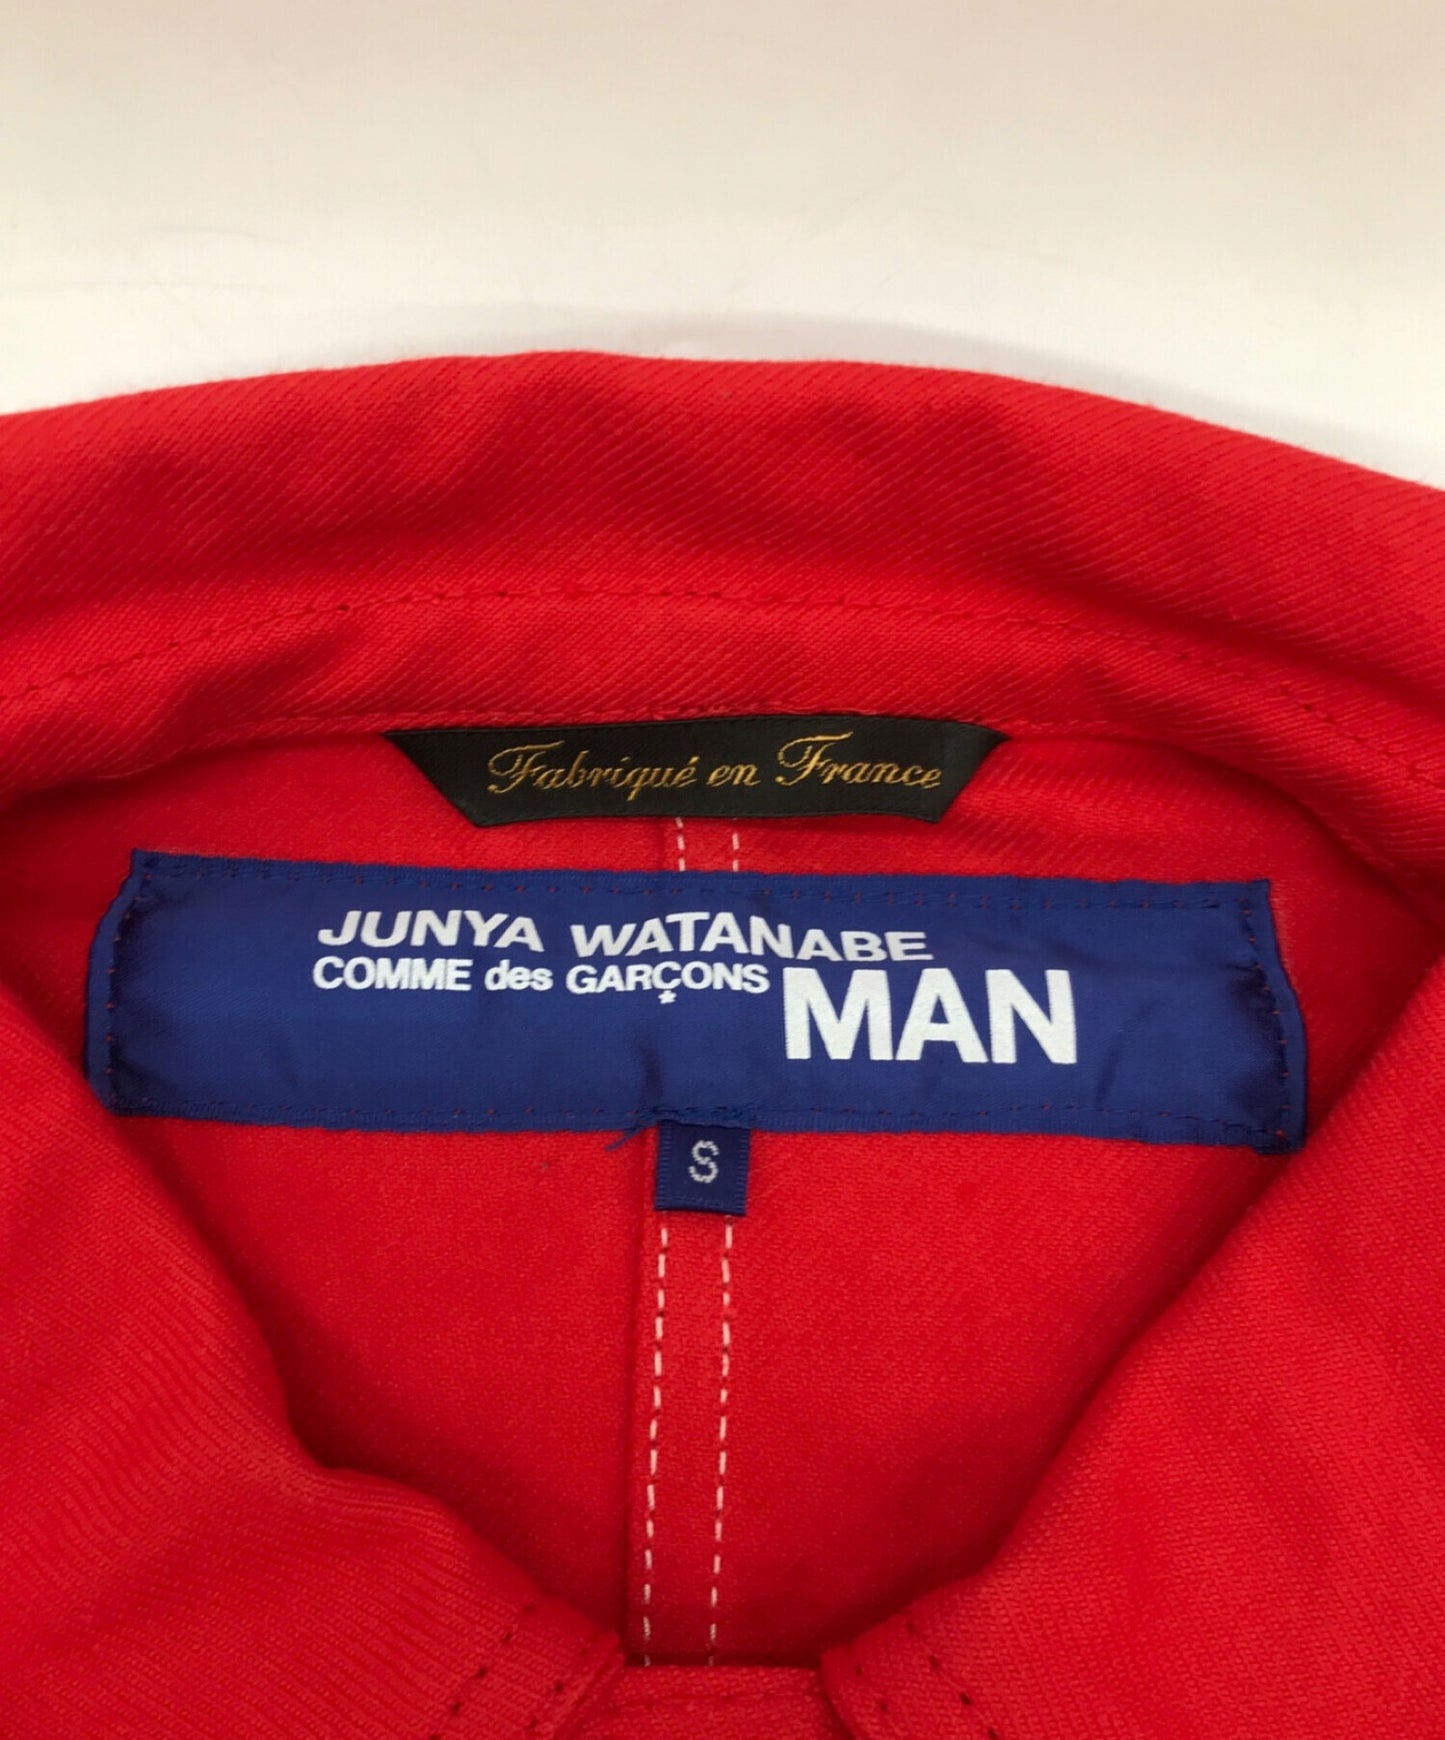 Comme des Garcons Junya Watanabe Man Jacket Jacket We-j402